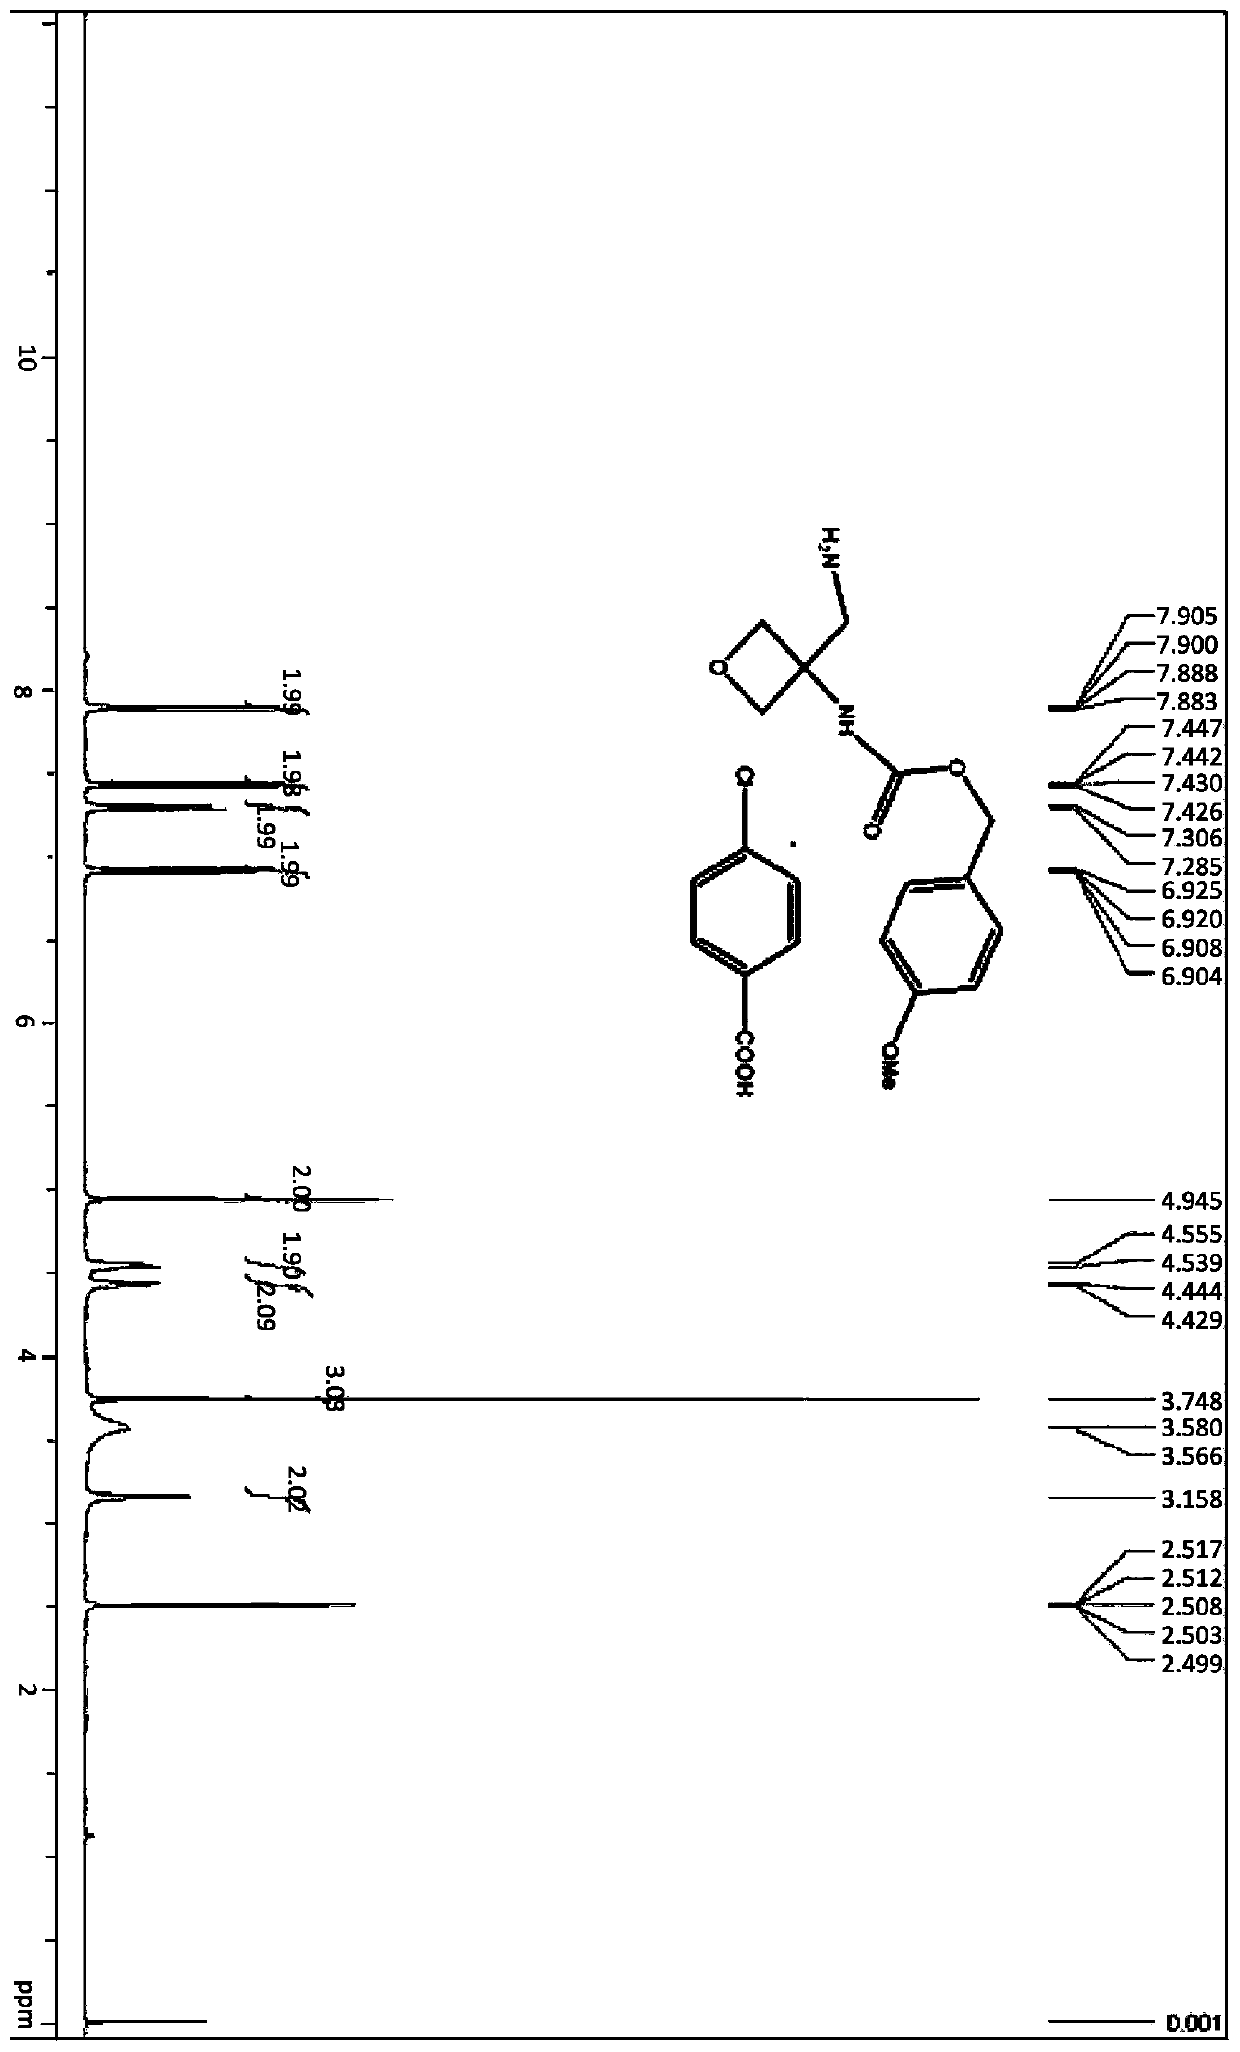 [3-(Aminomethyl)-oxetan-3-yl] p-methoxybenzyl carbamate p-chlorobenzoate synthetic method